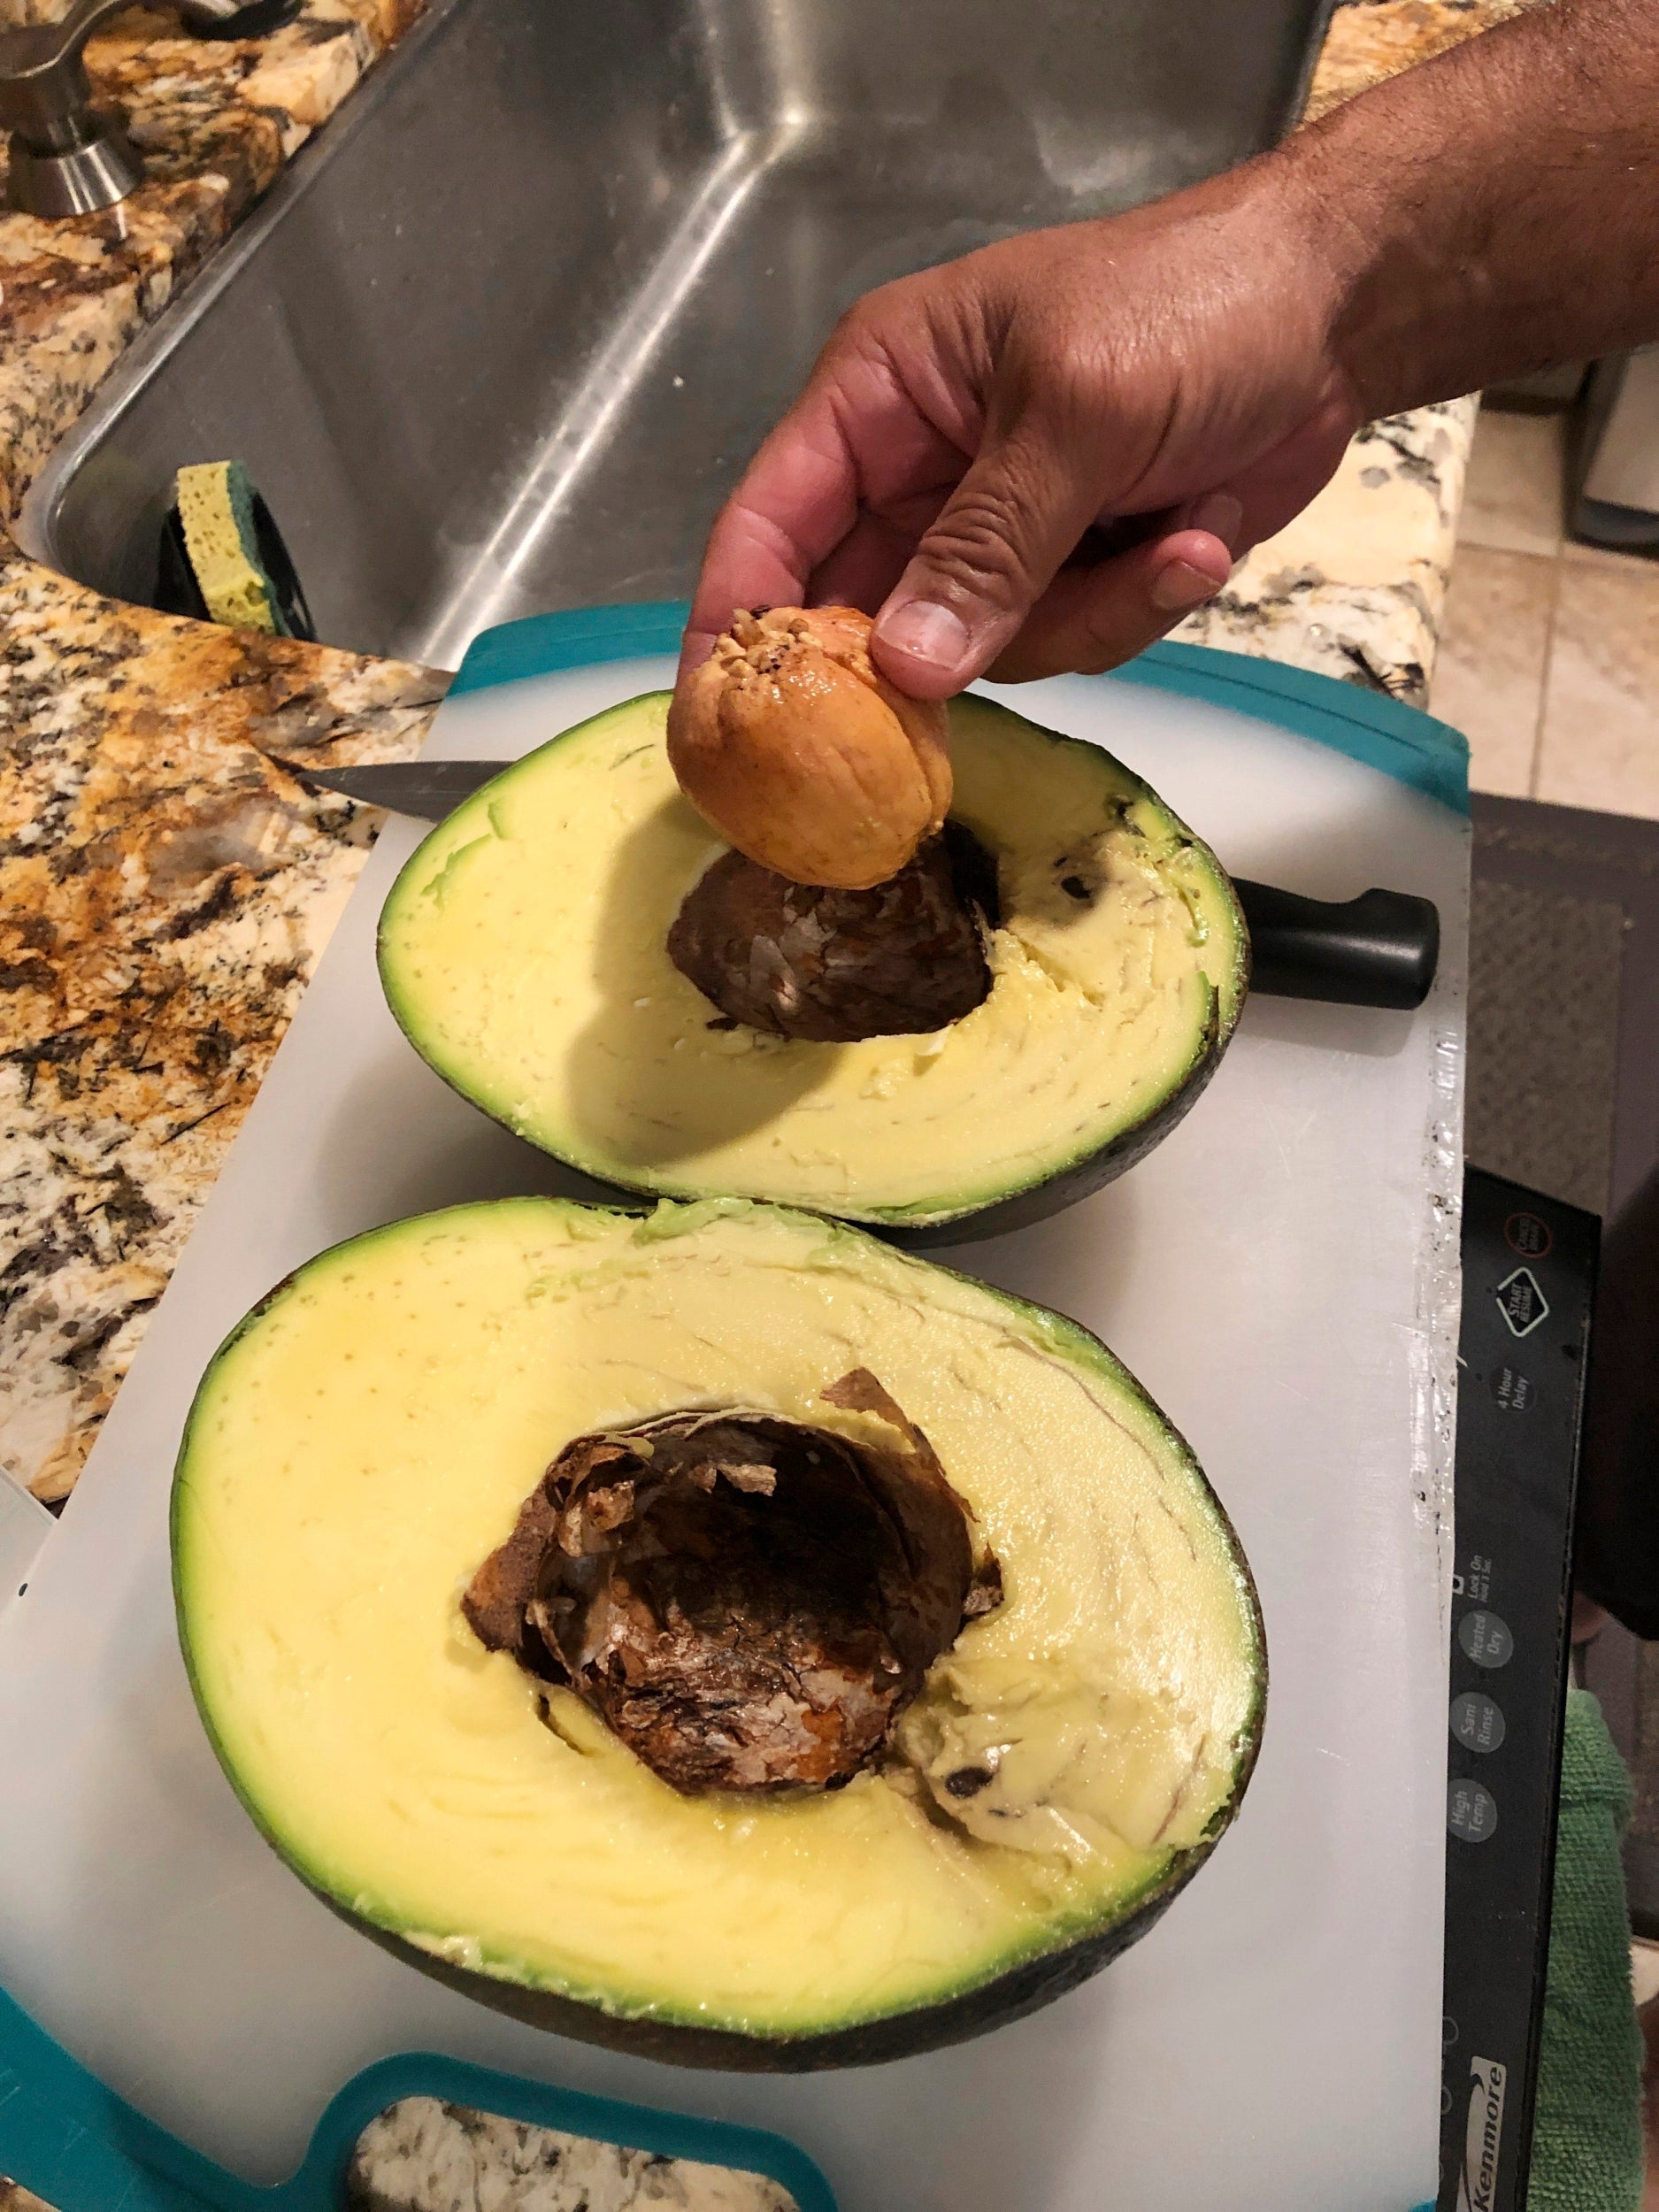 The avocado is cut into to make into guacamole. Photo taken on 13 December 2018